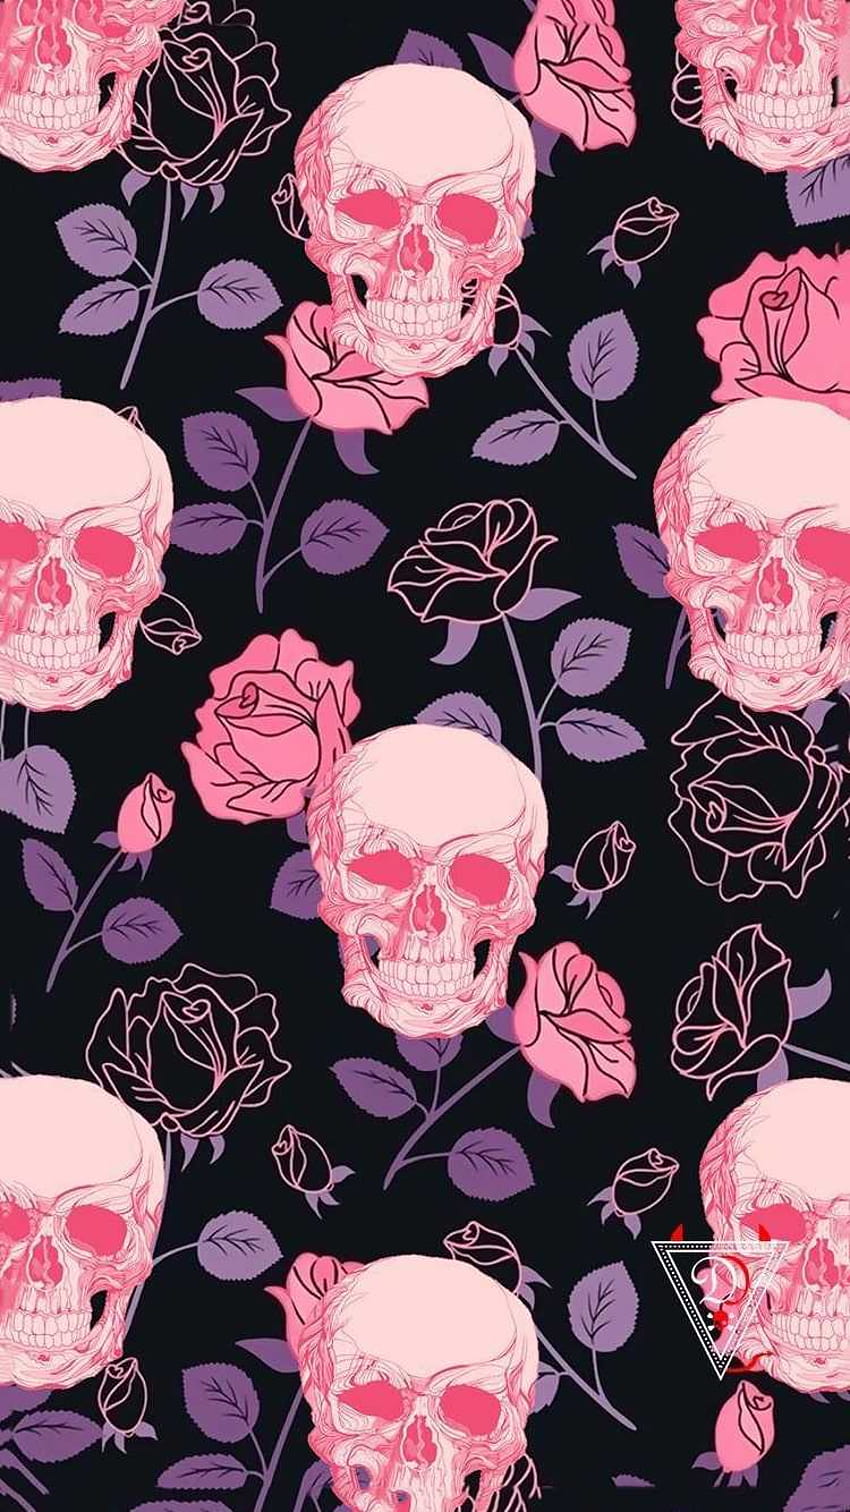 Aesthetic wallpaper with skulls and roses. - Gothic, skull, skeleton